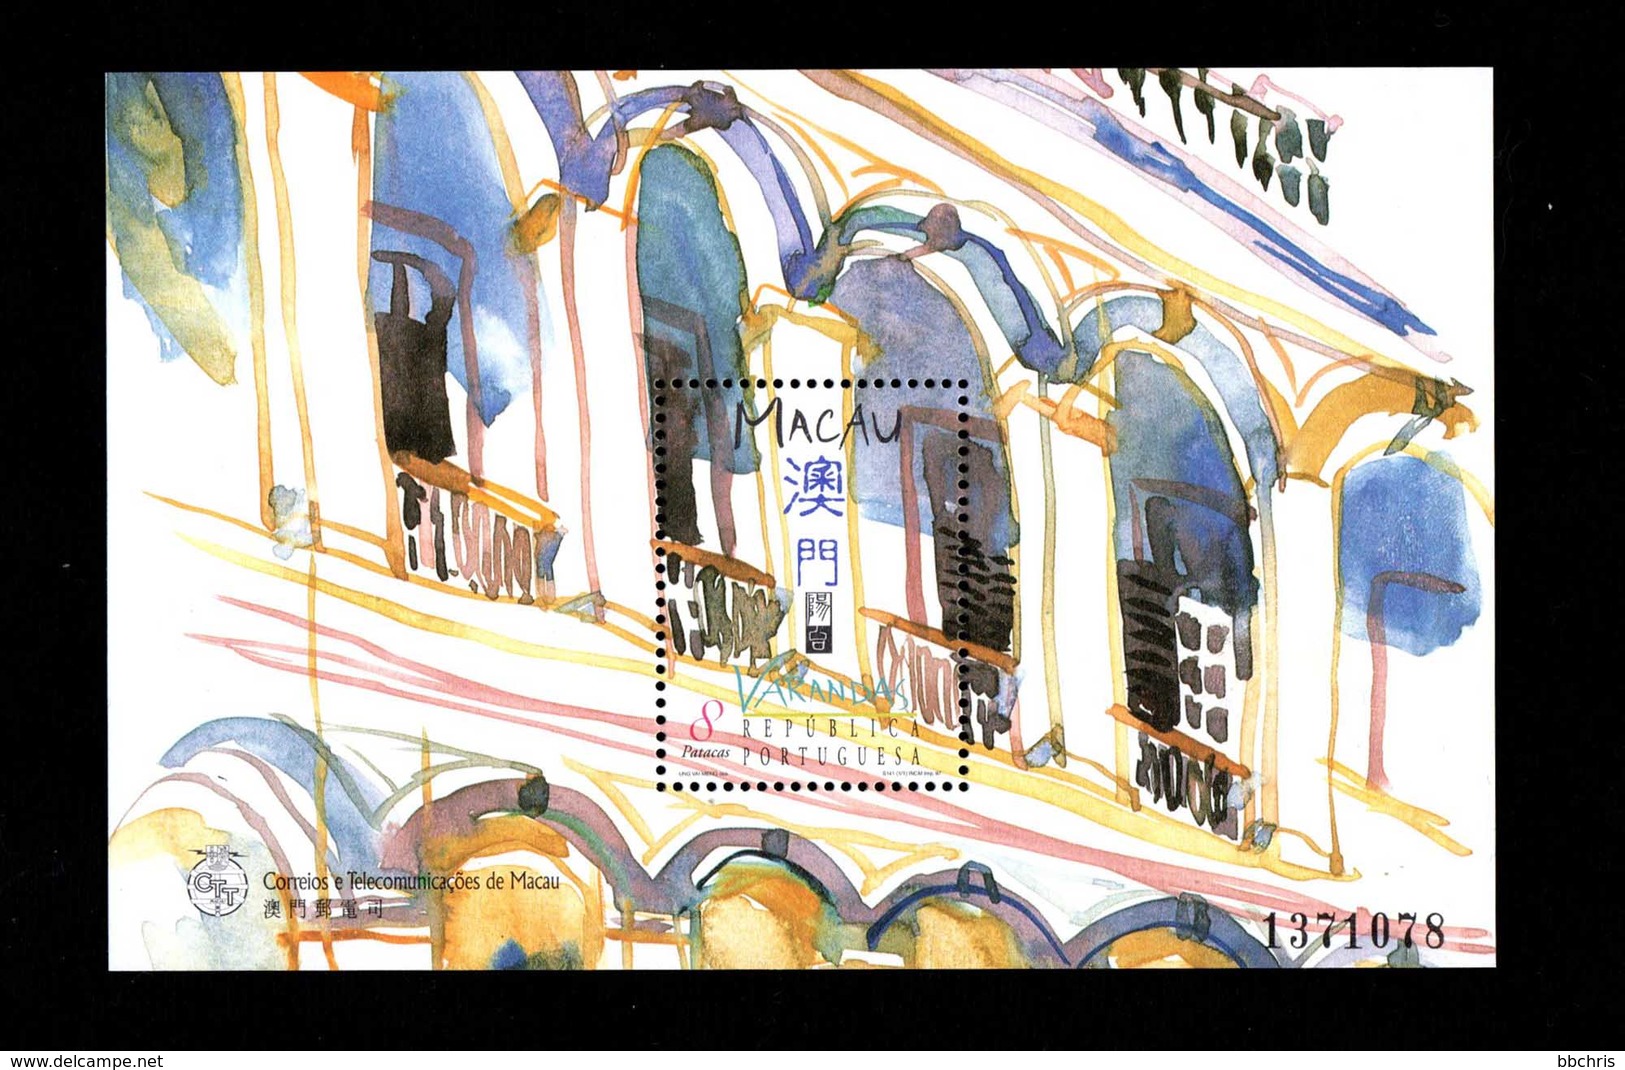 Macau Macao 1997 Varandas Balconies Painting Souvenir Sheet MNH Mint - Cuadernillos